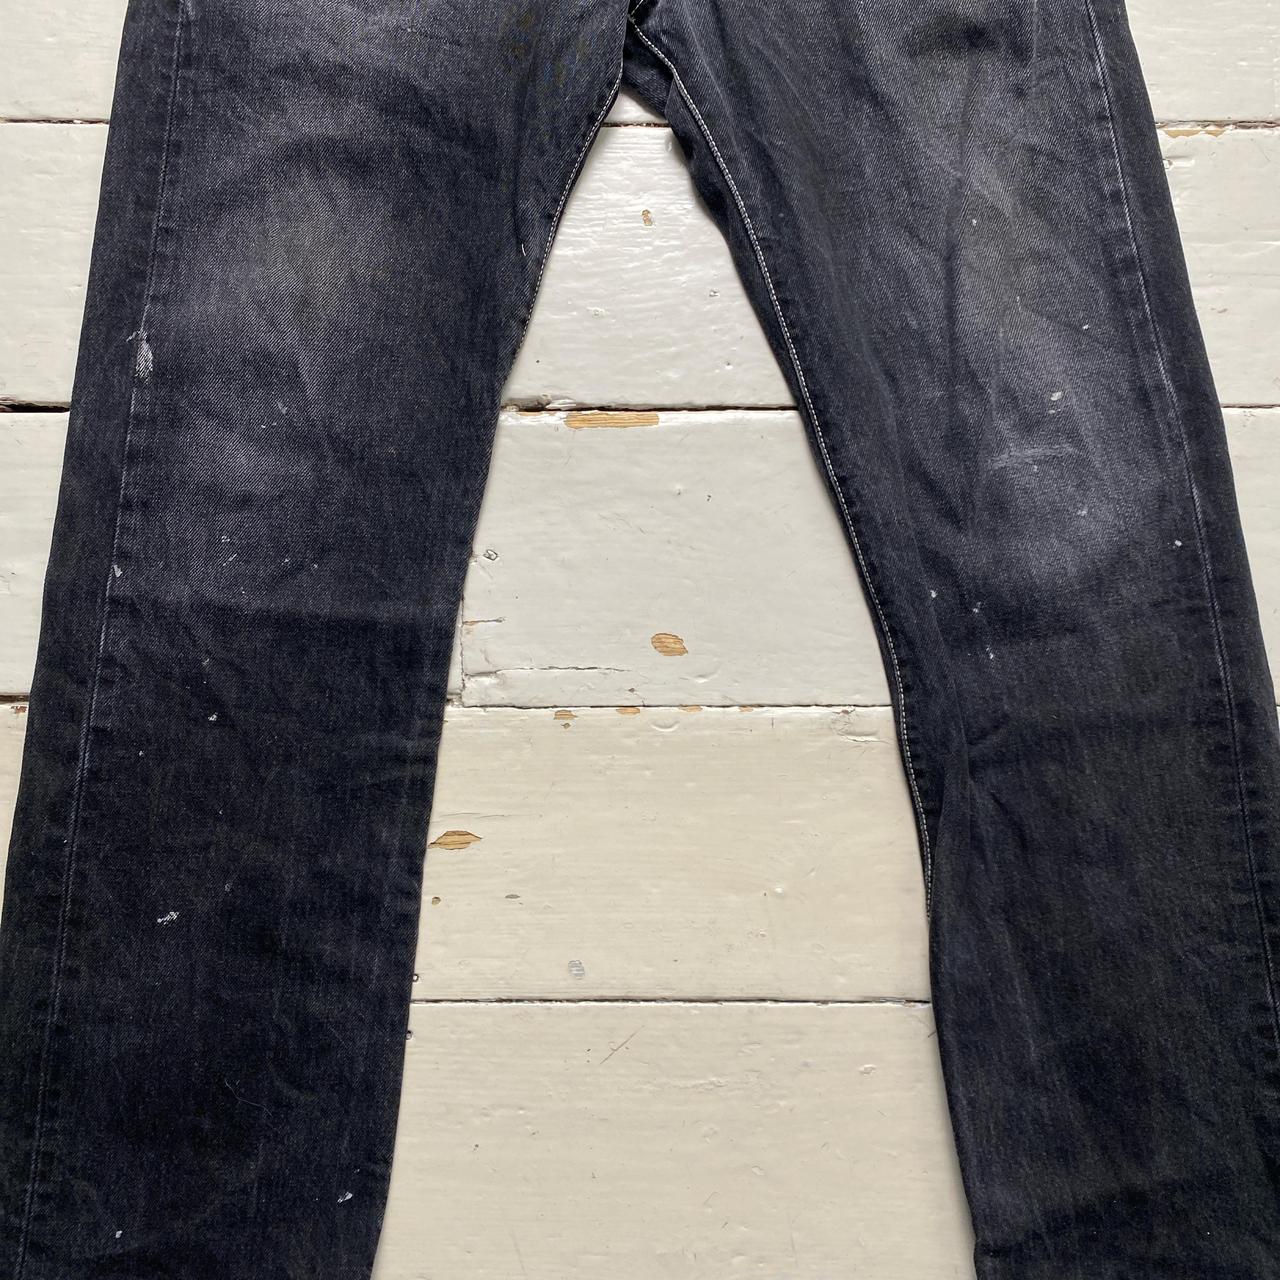 Levis 501 Baggy Contrast White Stitch Jeans